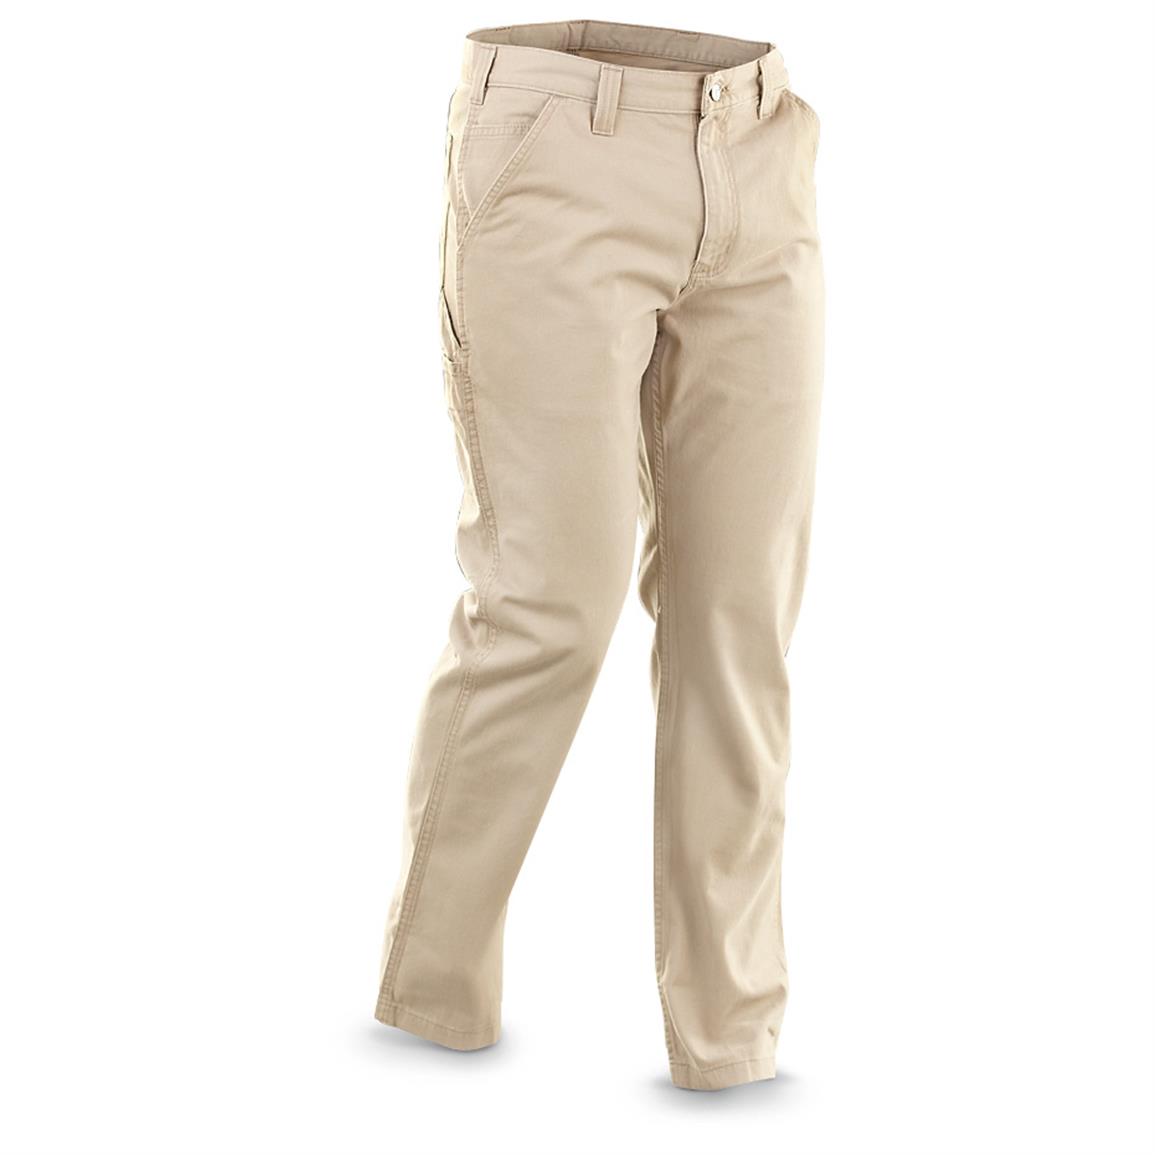 Carhartt Men's Twill Carpenter Pants - 283175, Jeans & Pants at ...